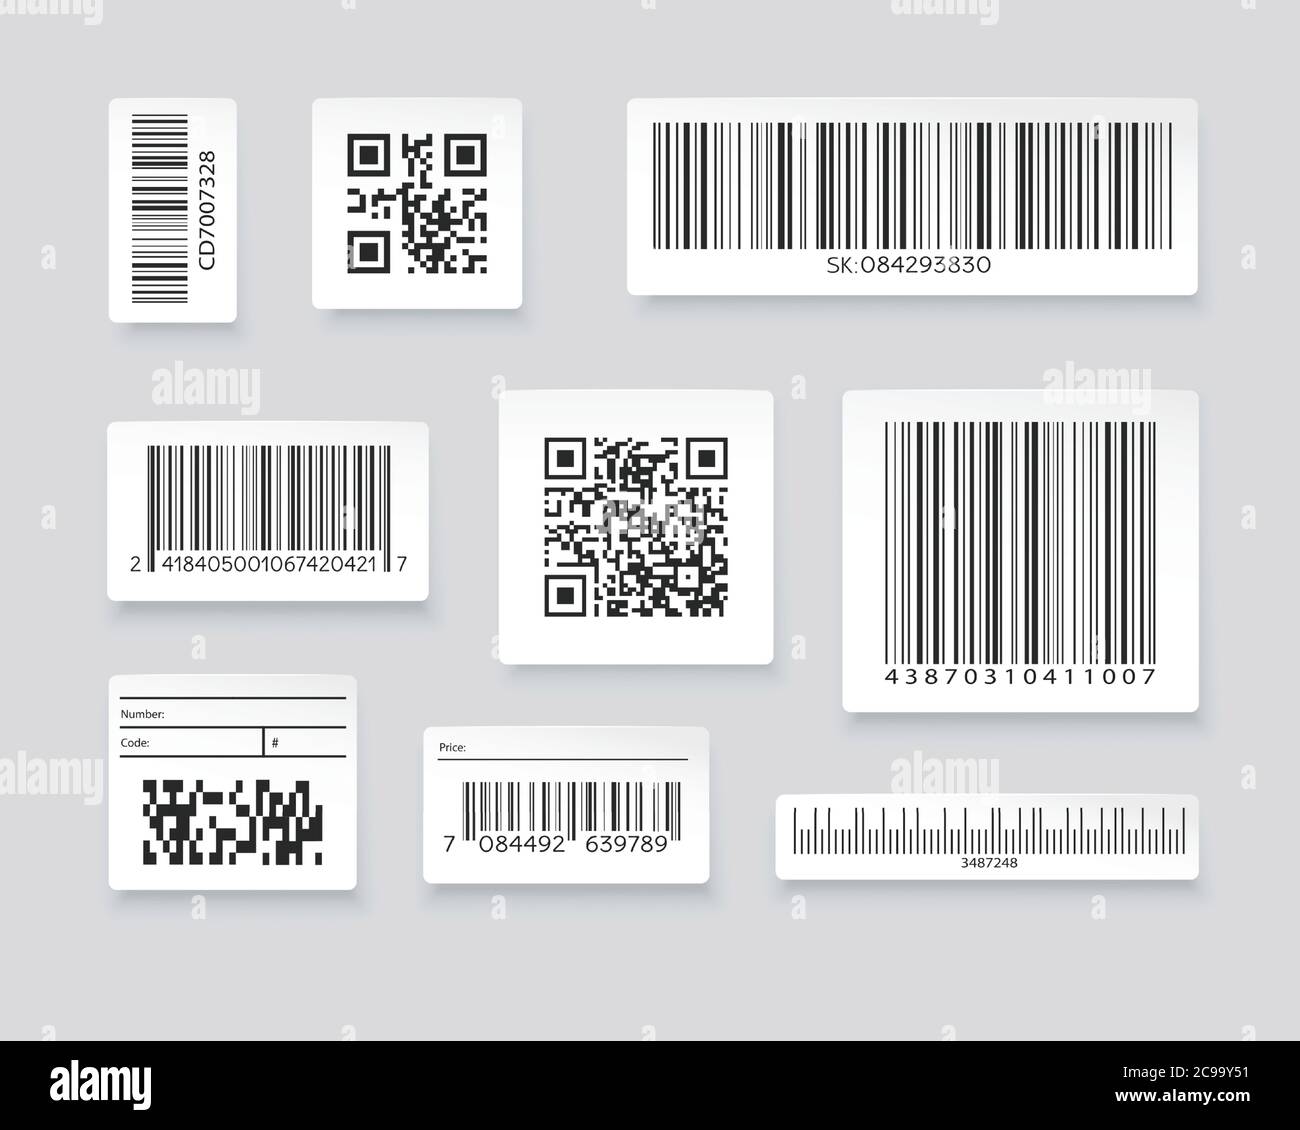 QR codes and barcode labels. Supermarket scan code bars, industrial barcode labels. Barcode label for scan, bar code sticker, vector illustration. Stock Vector